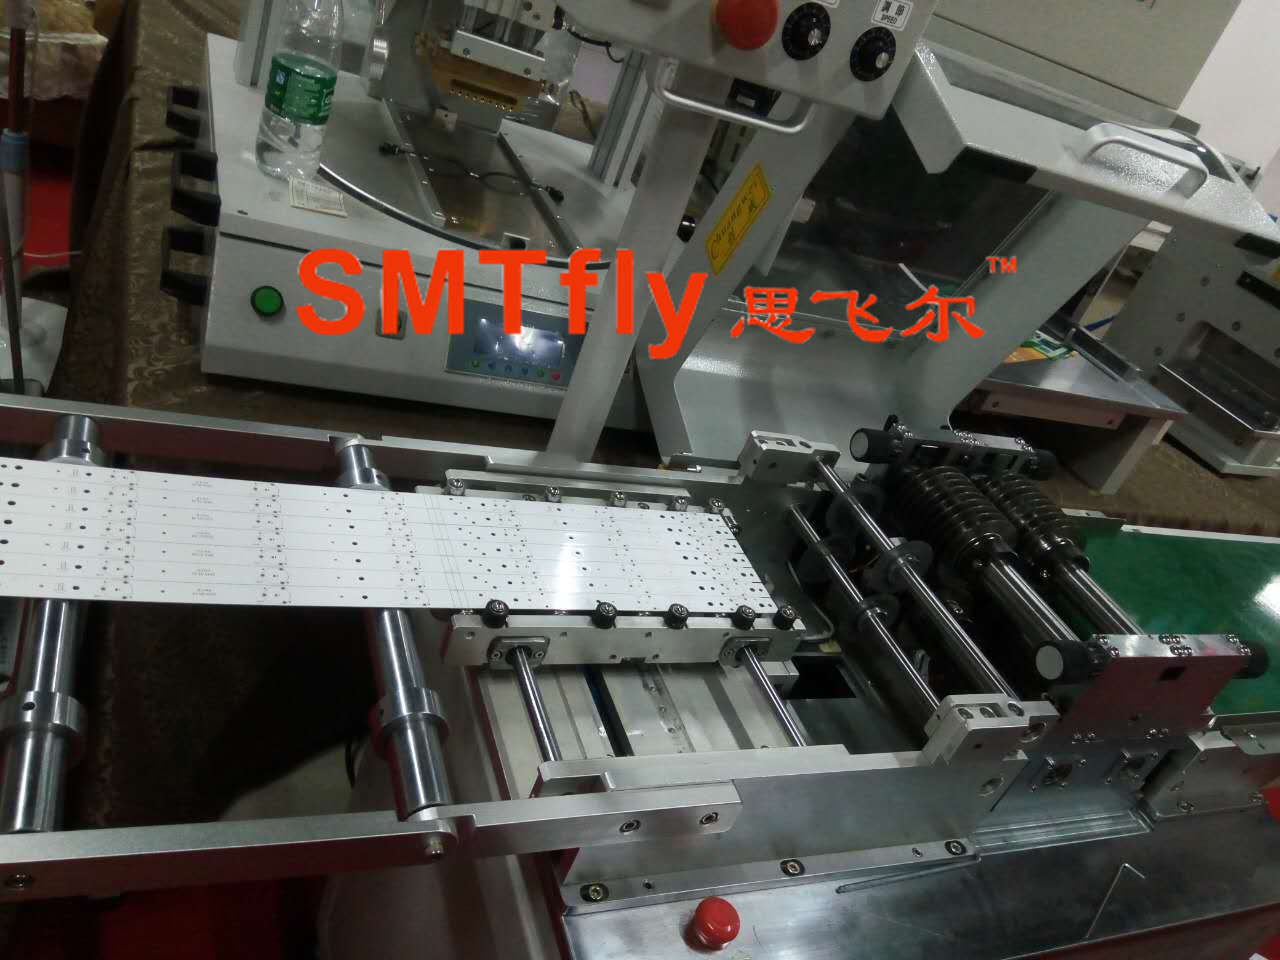 Multi PCB Separator Tool,SMTfly-5